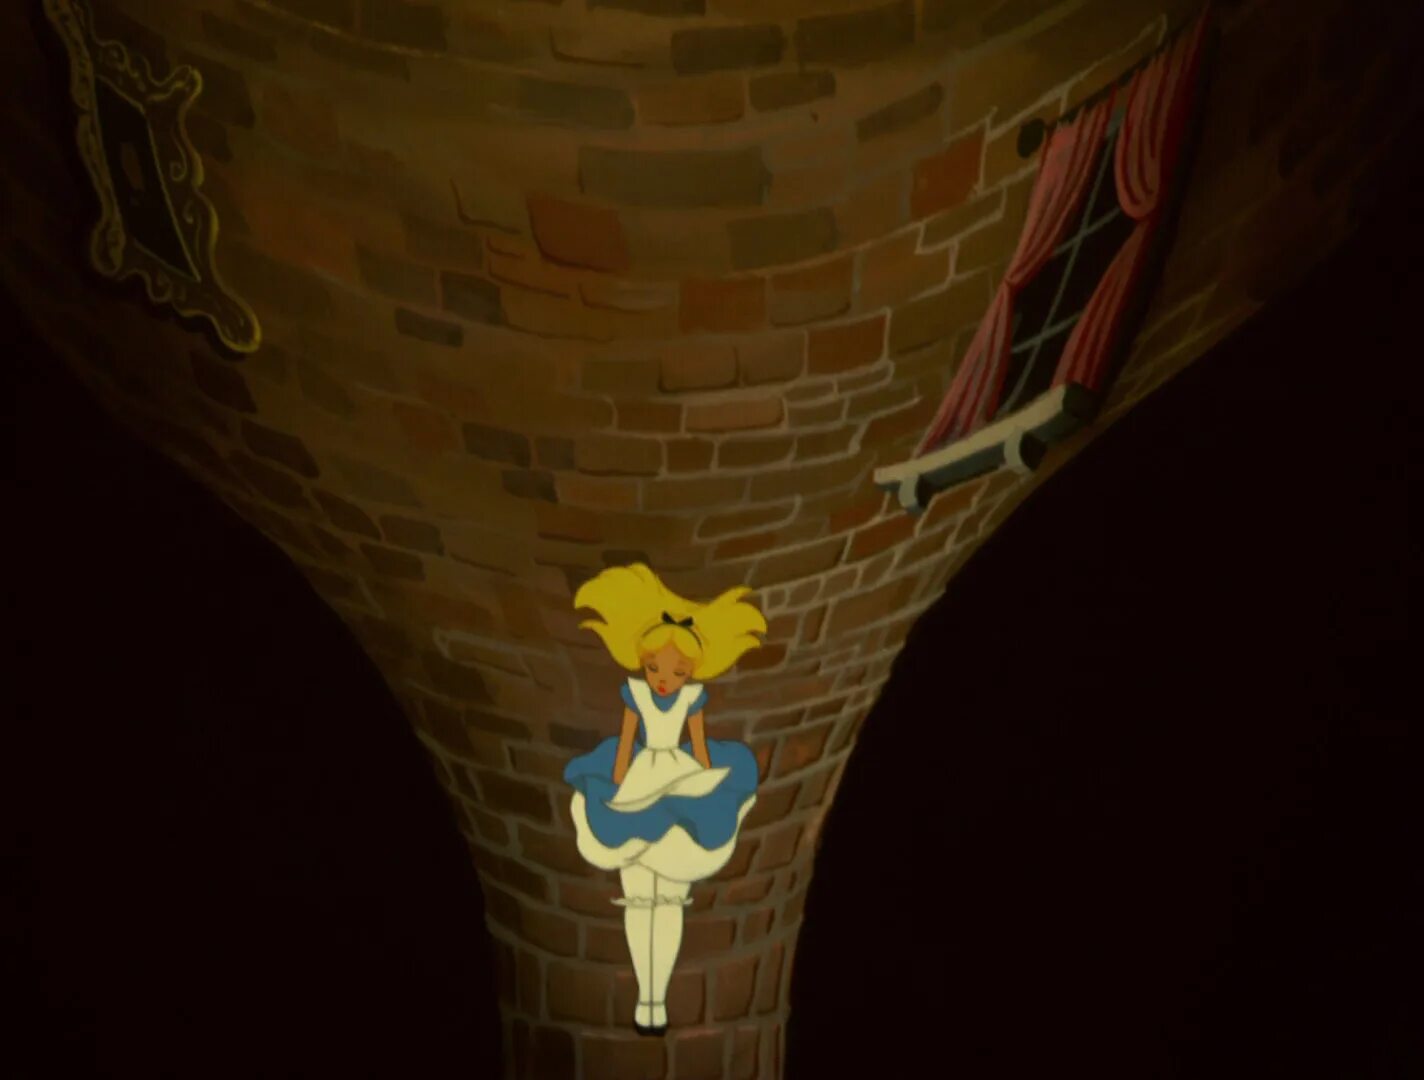 Rabbit hole pure pure animation. Алиса в стране чудес 1951 падает в нору.